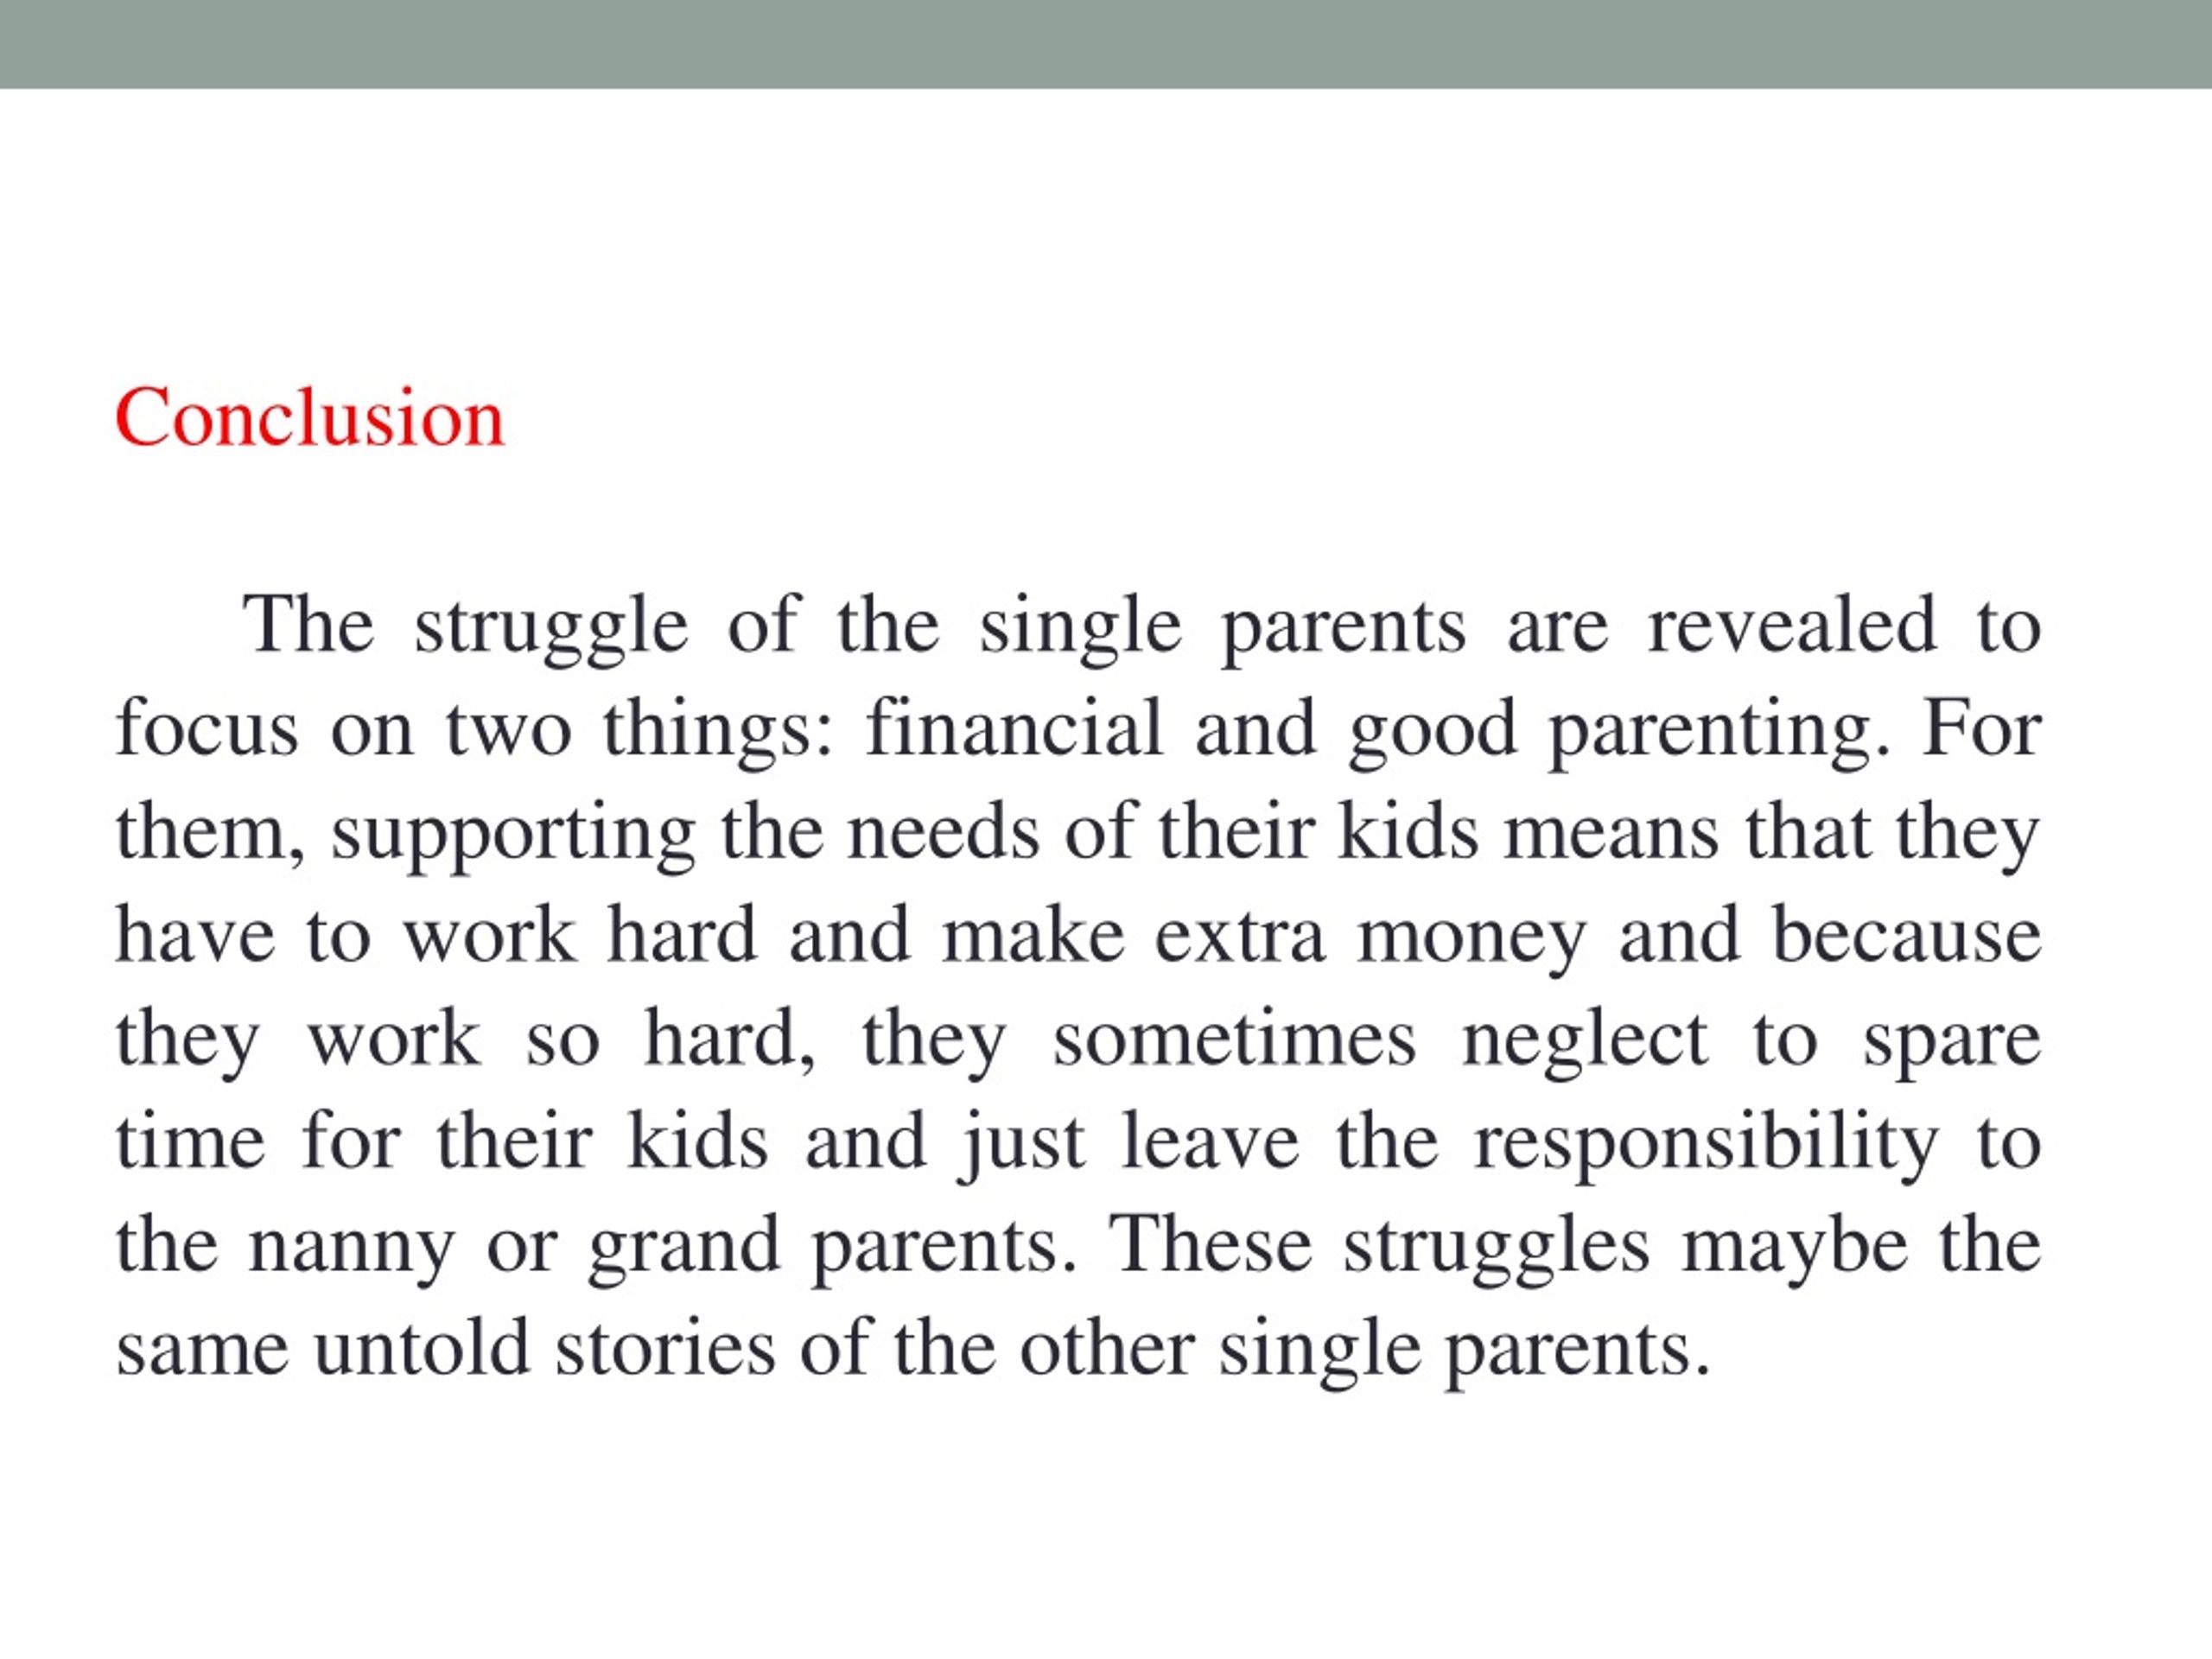 single parent struggle essay is the argument valid